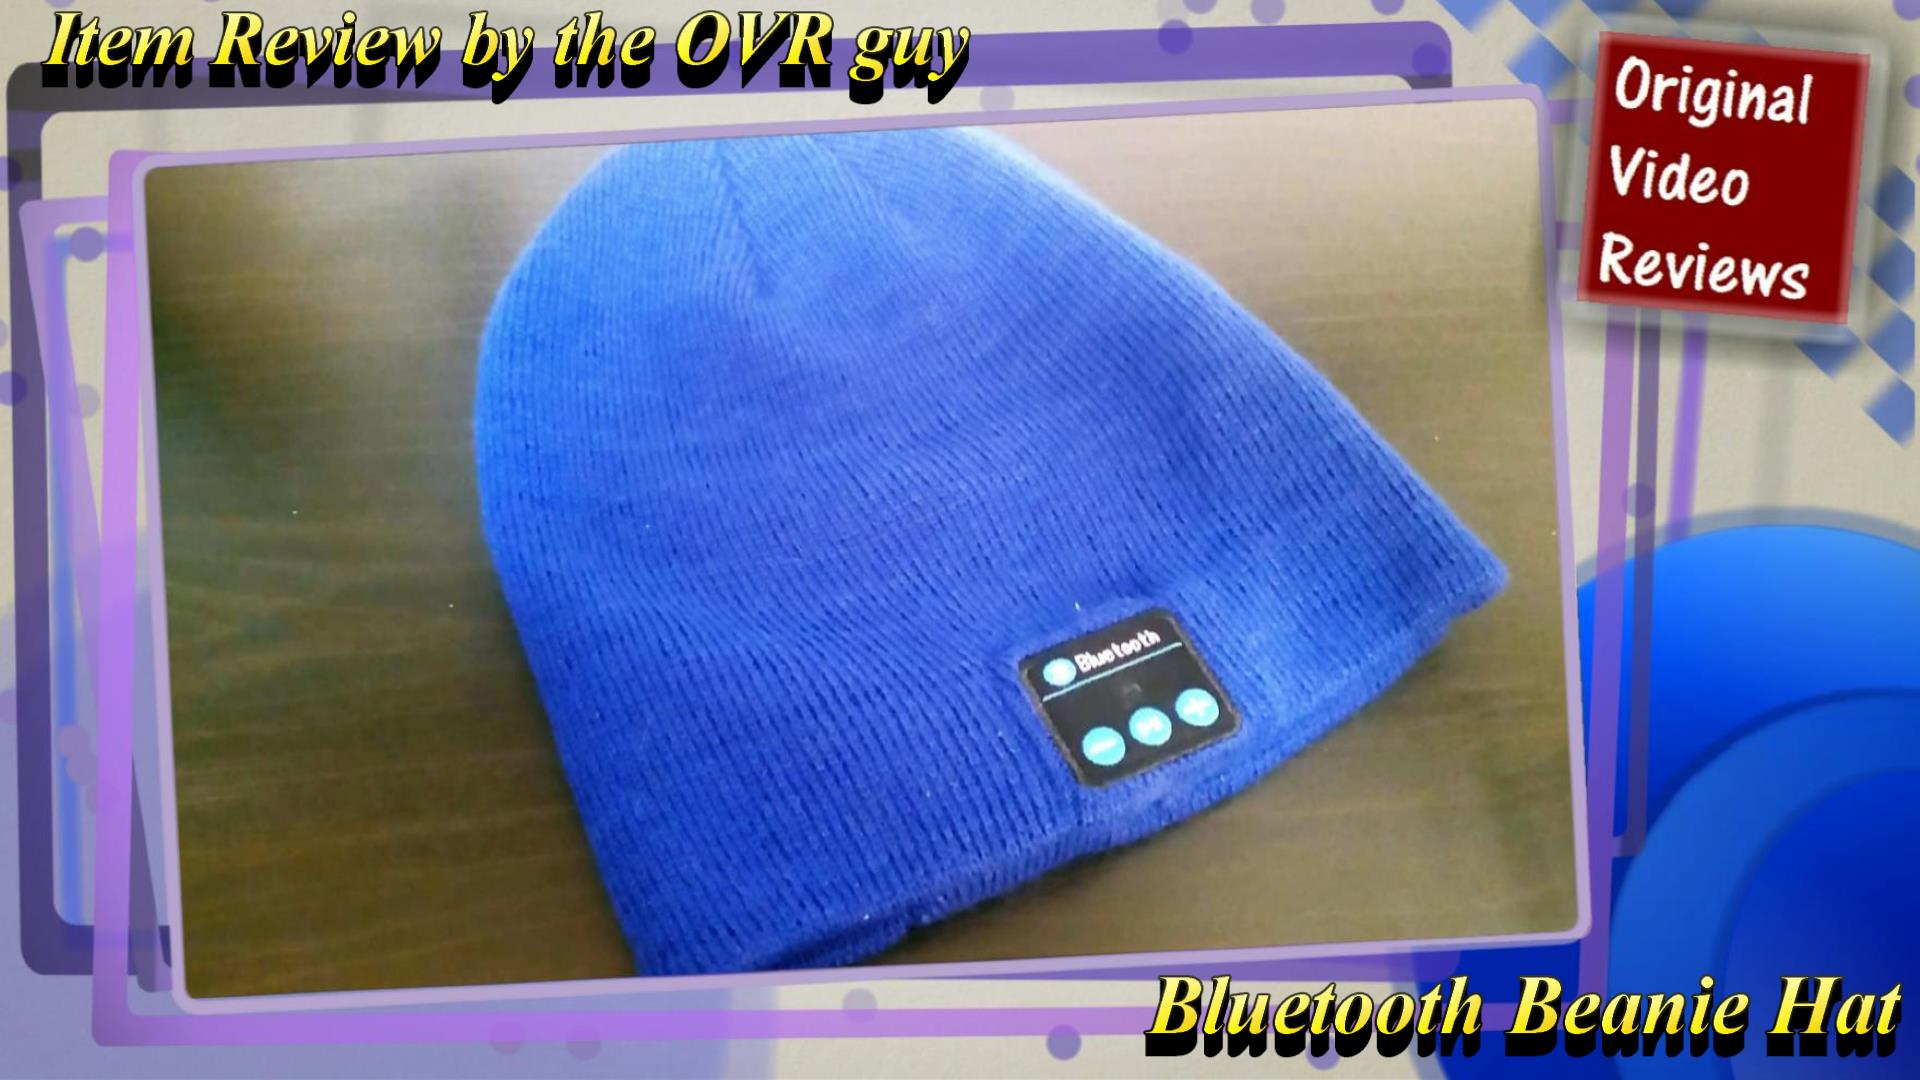 Bluetooth Beanie Hat Review (Thumbnail)